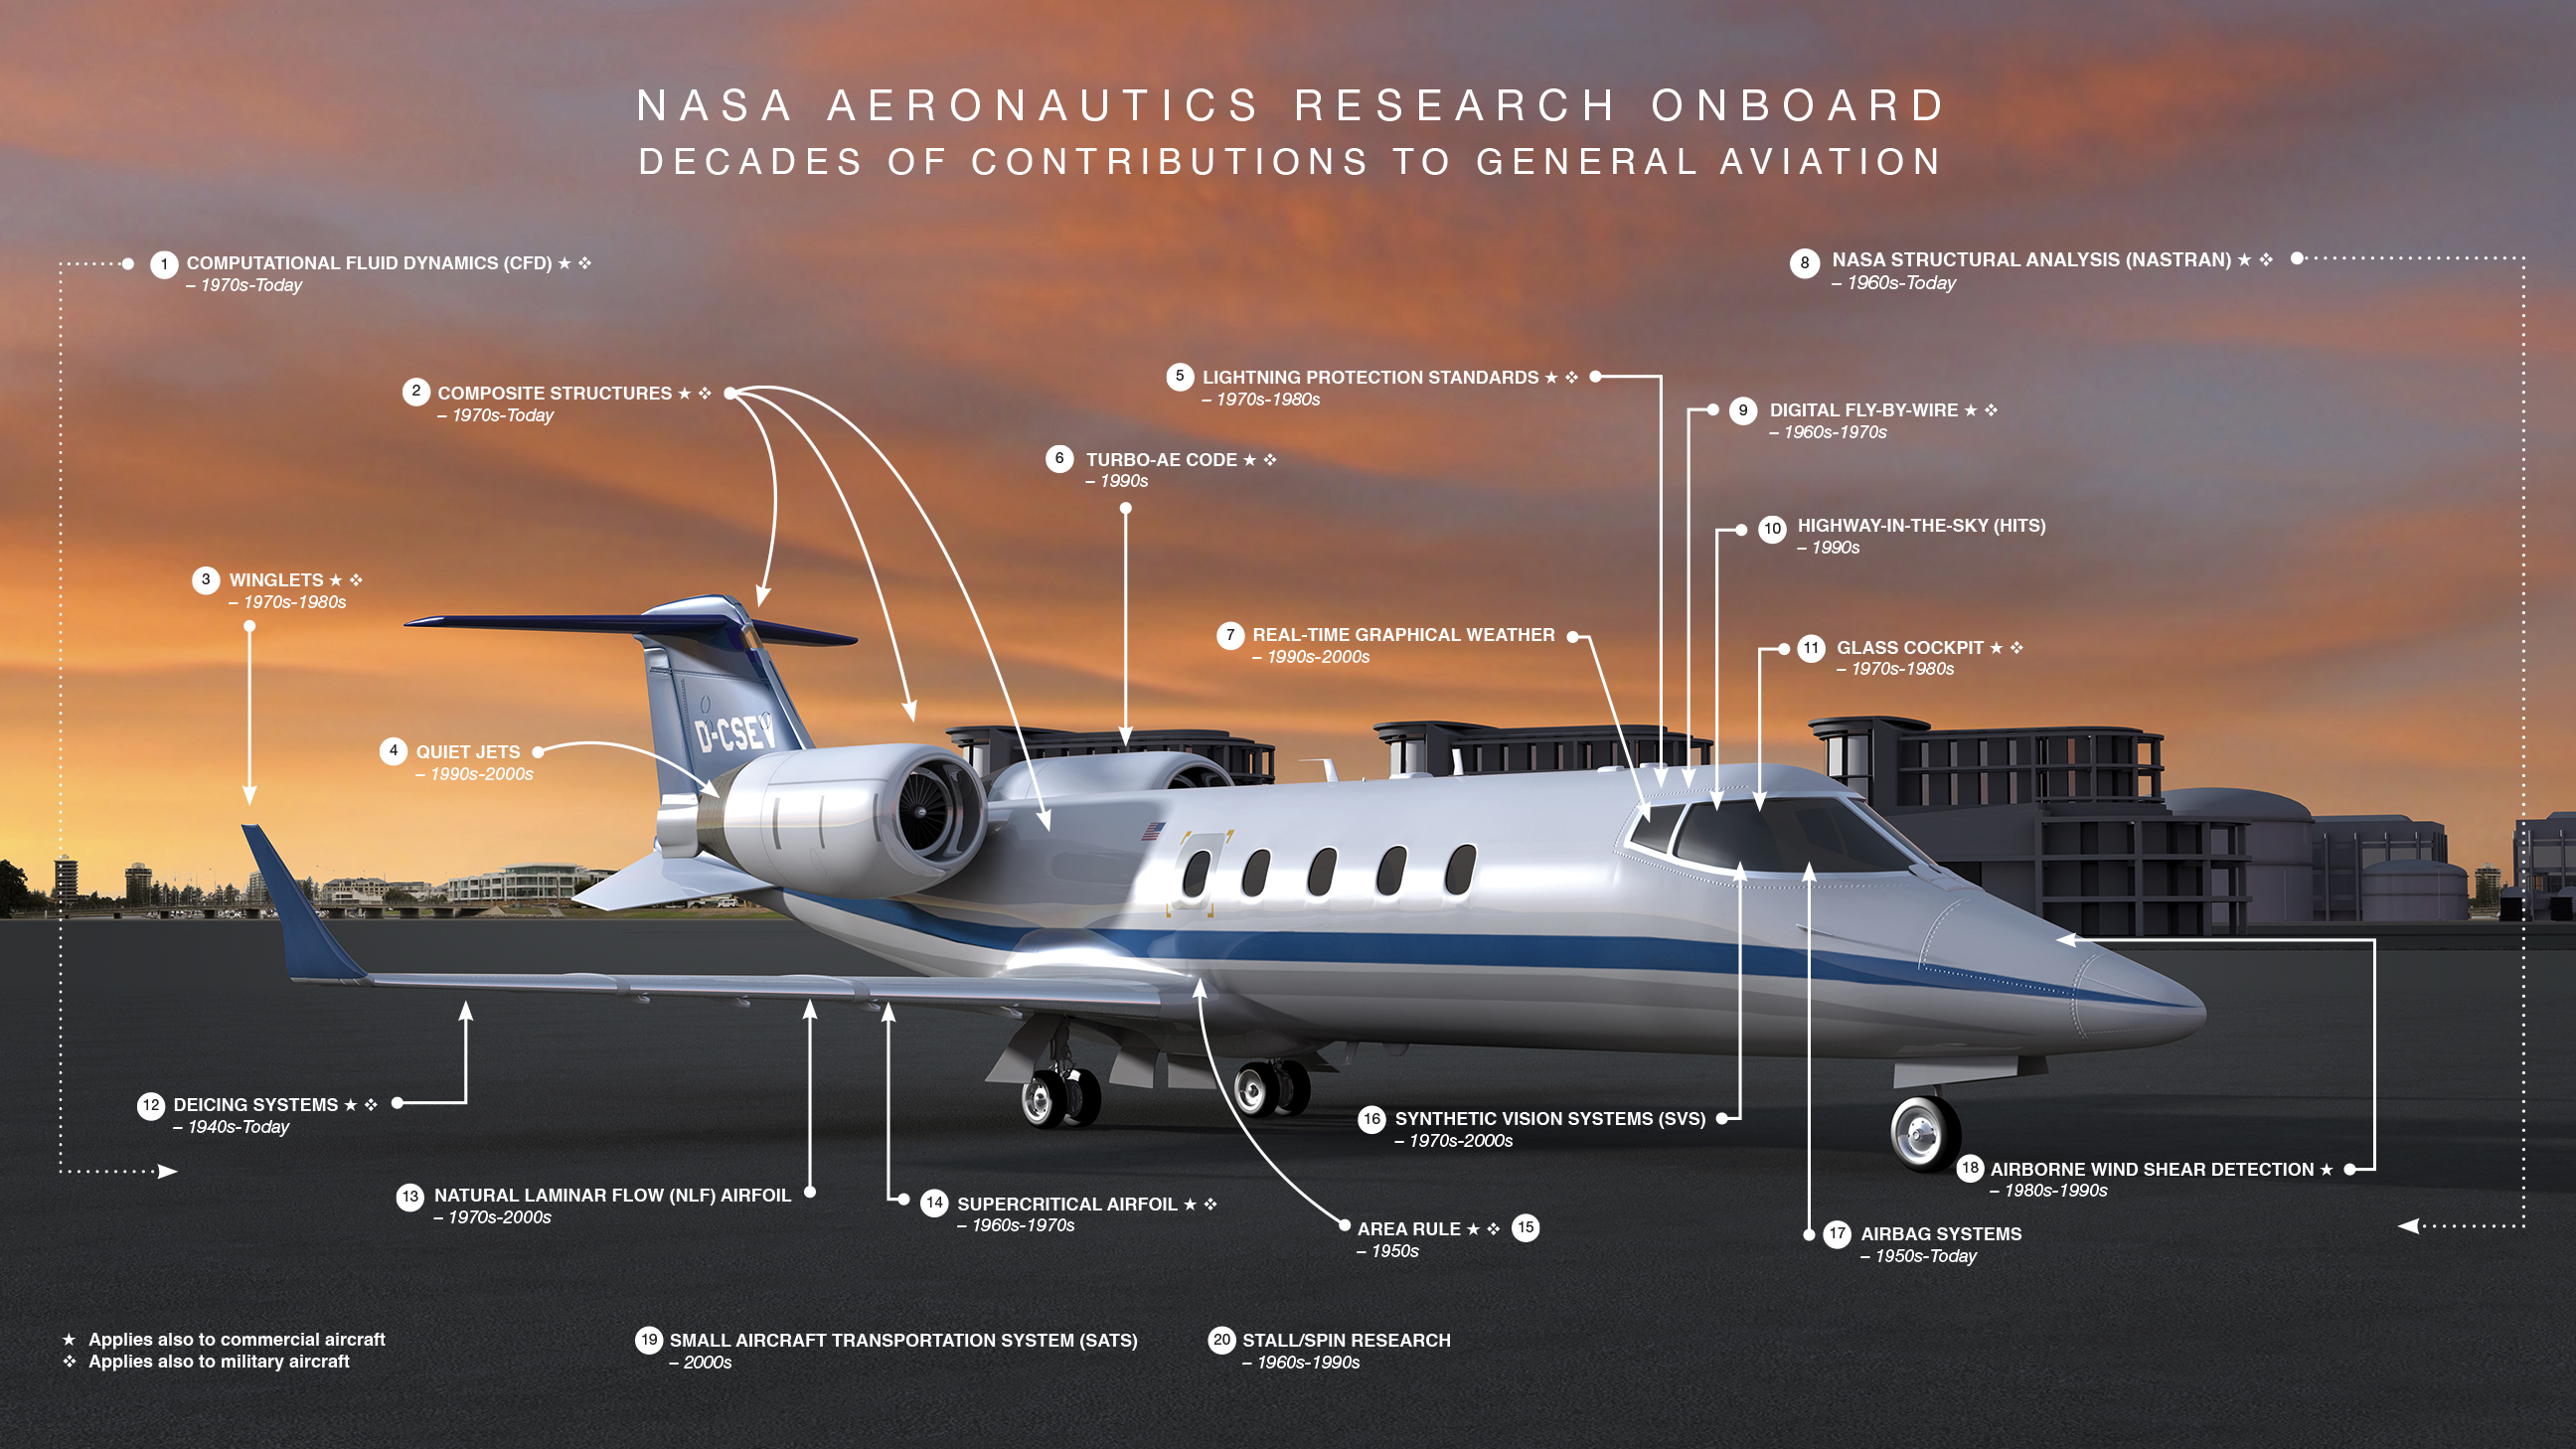 Illustration of general aviation jet sitting on tarmac, NASA-developed aeronautics technology text.